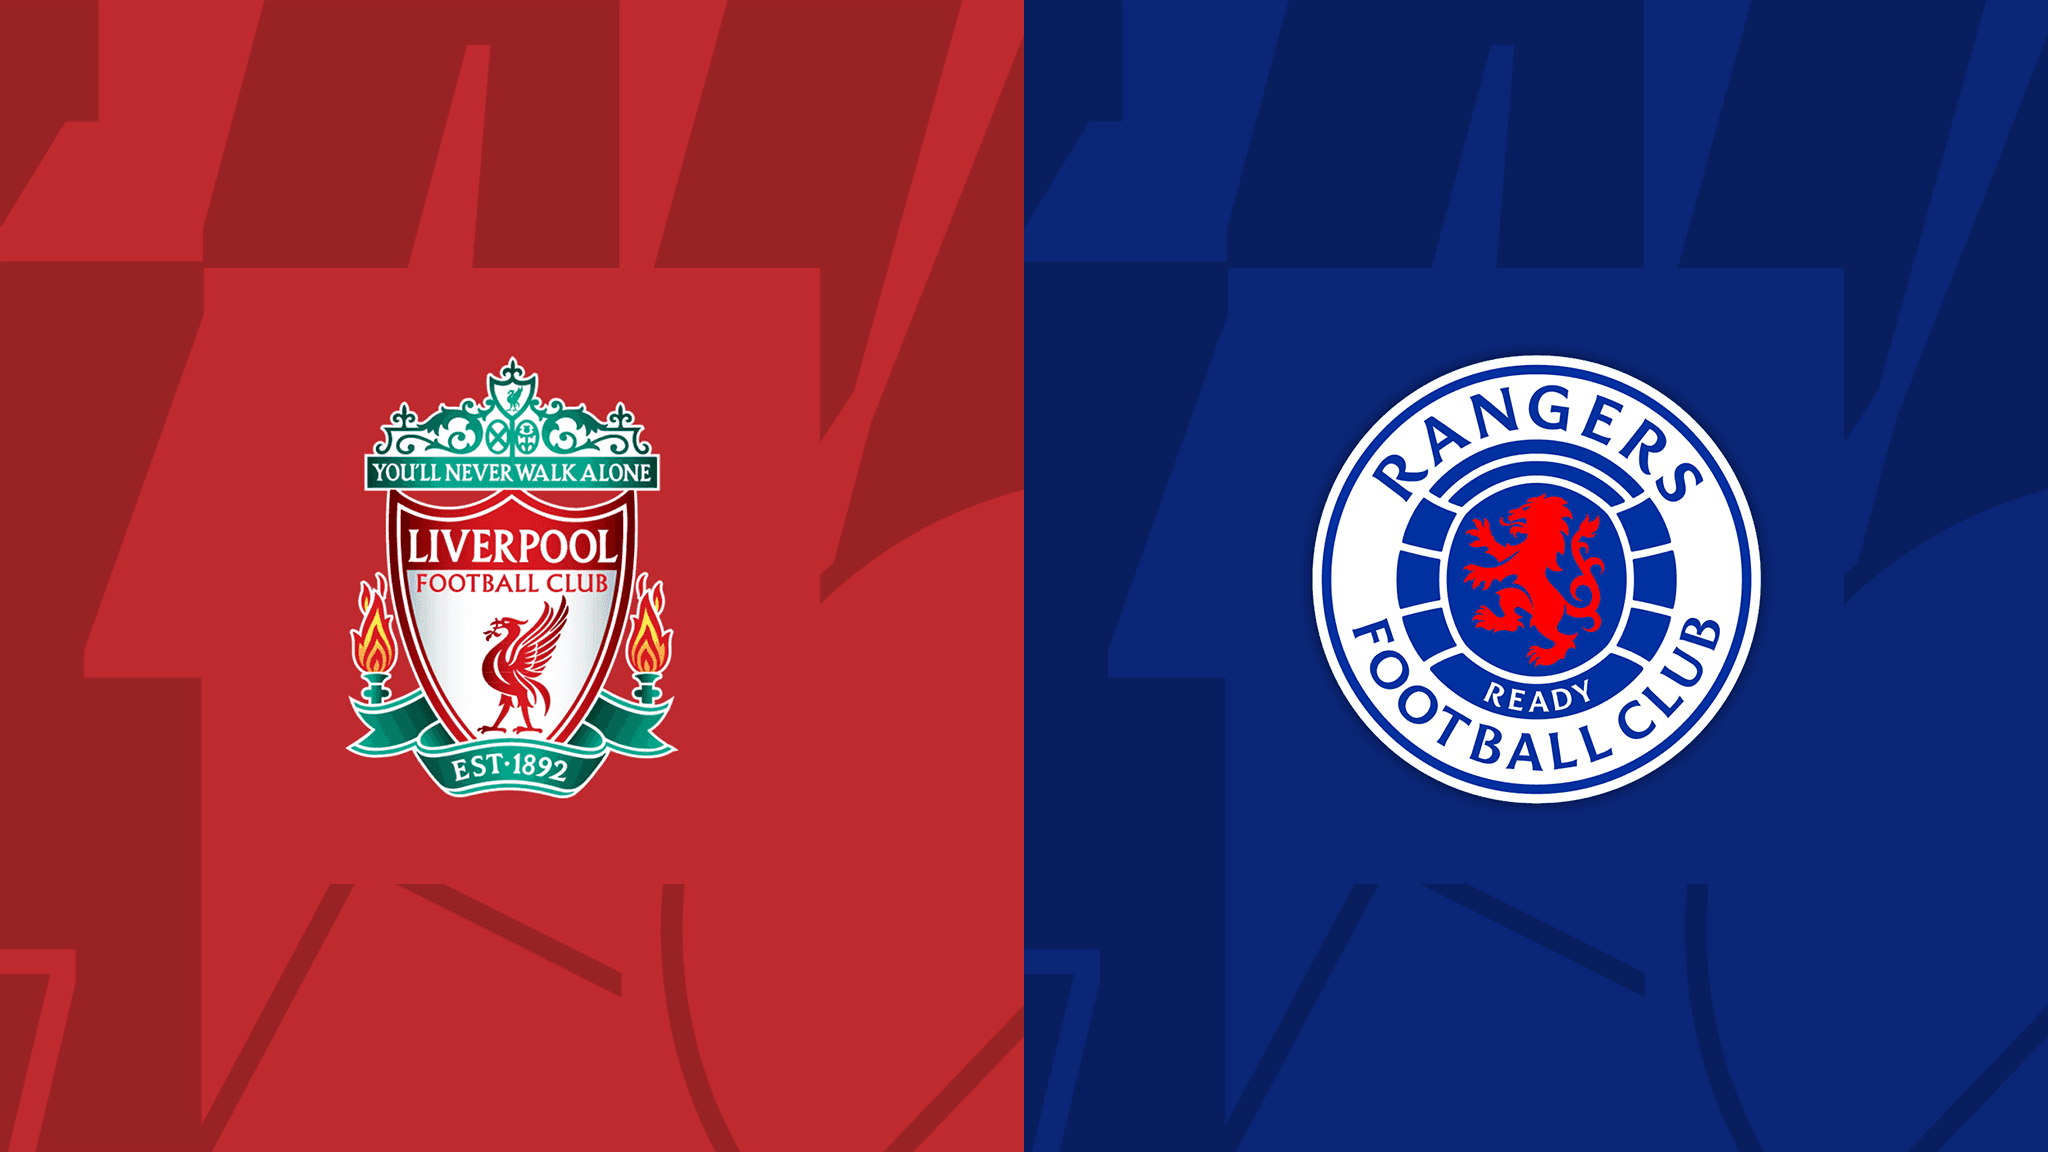  مشاهدة مباراة ليفربول و جلاسكو رينجرز بث مباشر 04/10/2022 Liverpool vs Rangers